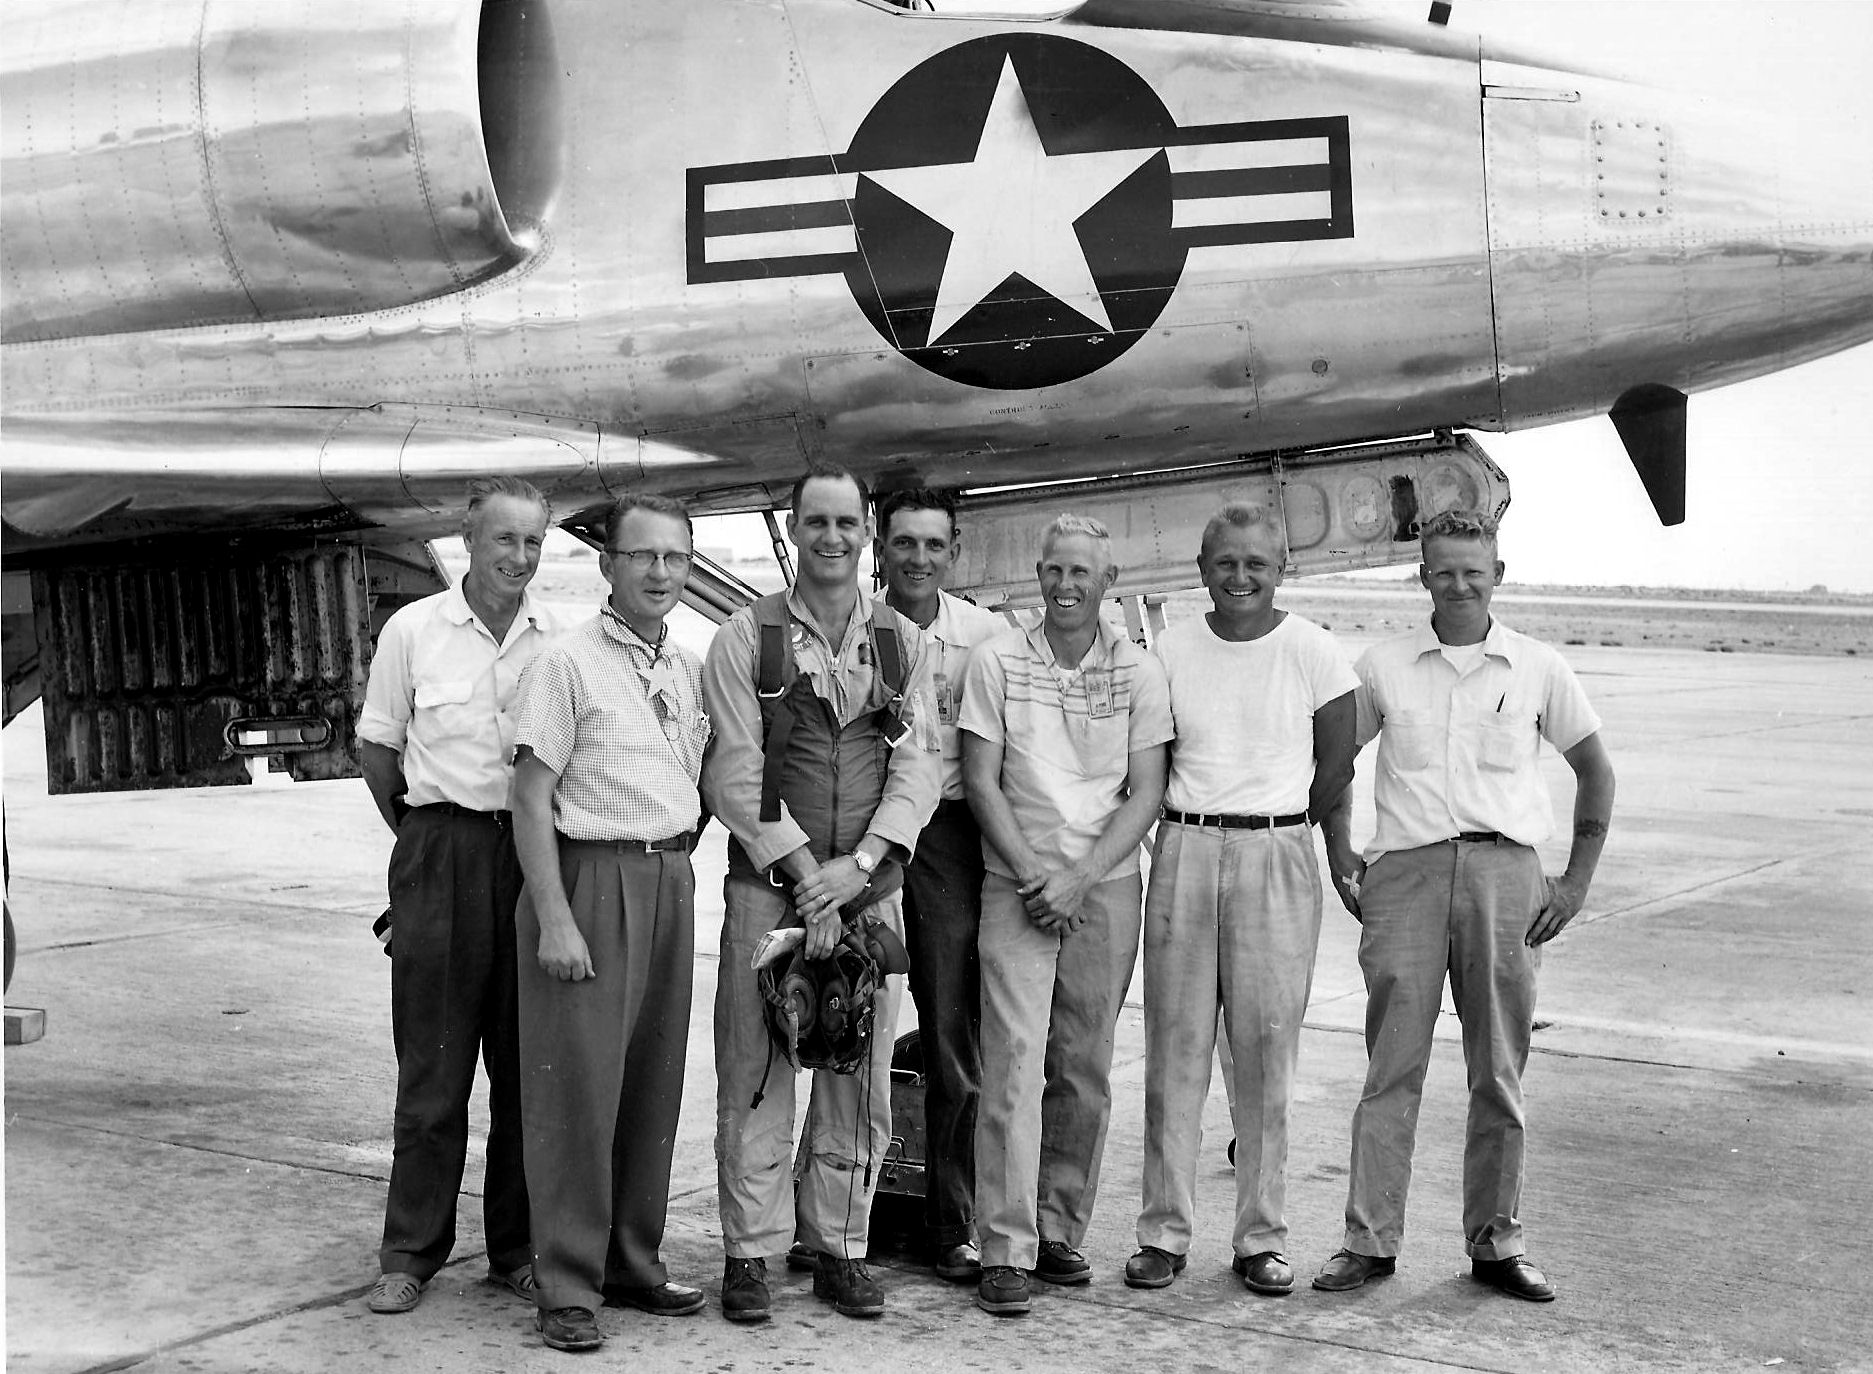 Lieutenant Gordon L. Gray, Jr., U.S. Navy (thrid from left) with the Douglas Aircraft Company A4D team at Edwards AFB, California, 15 October 1955. (Navy Pilot Overseas)